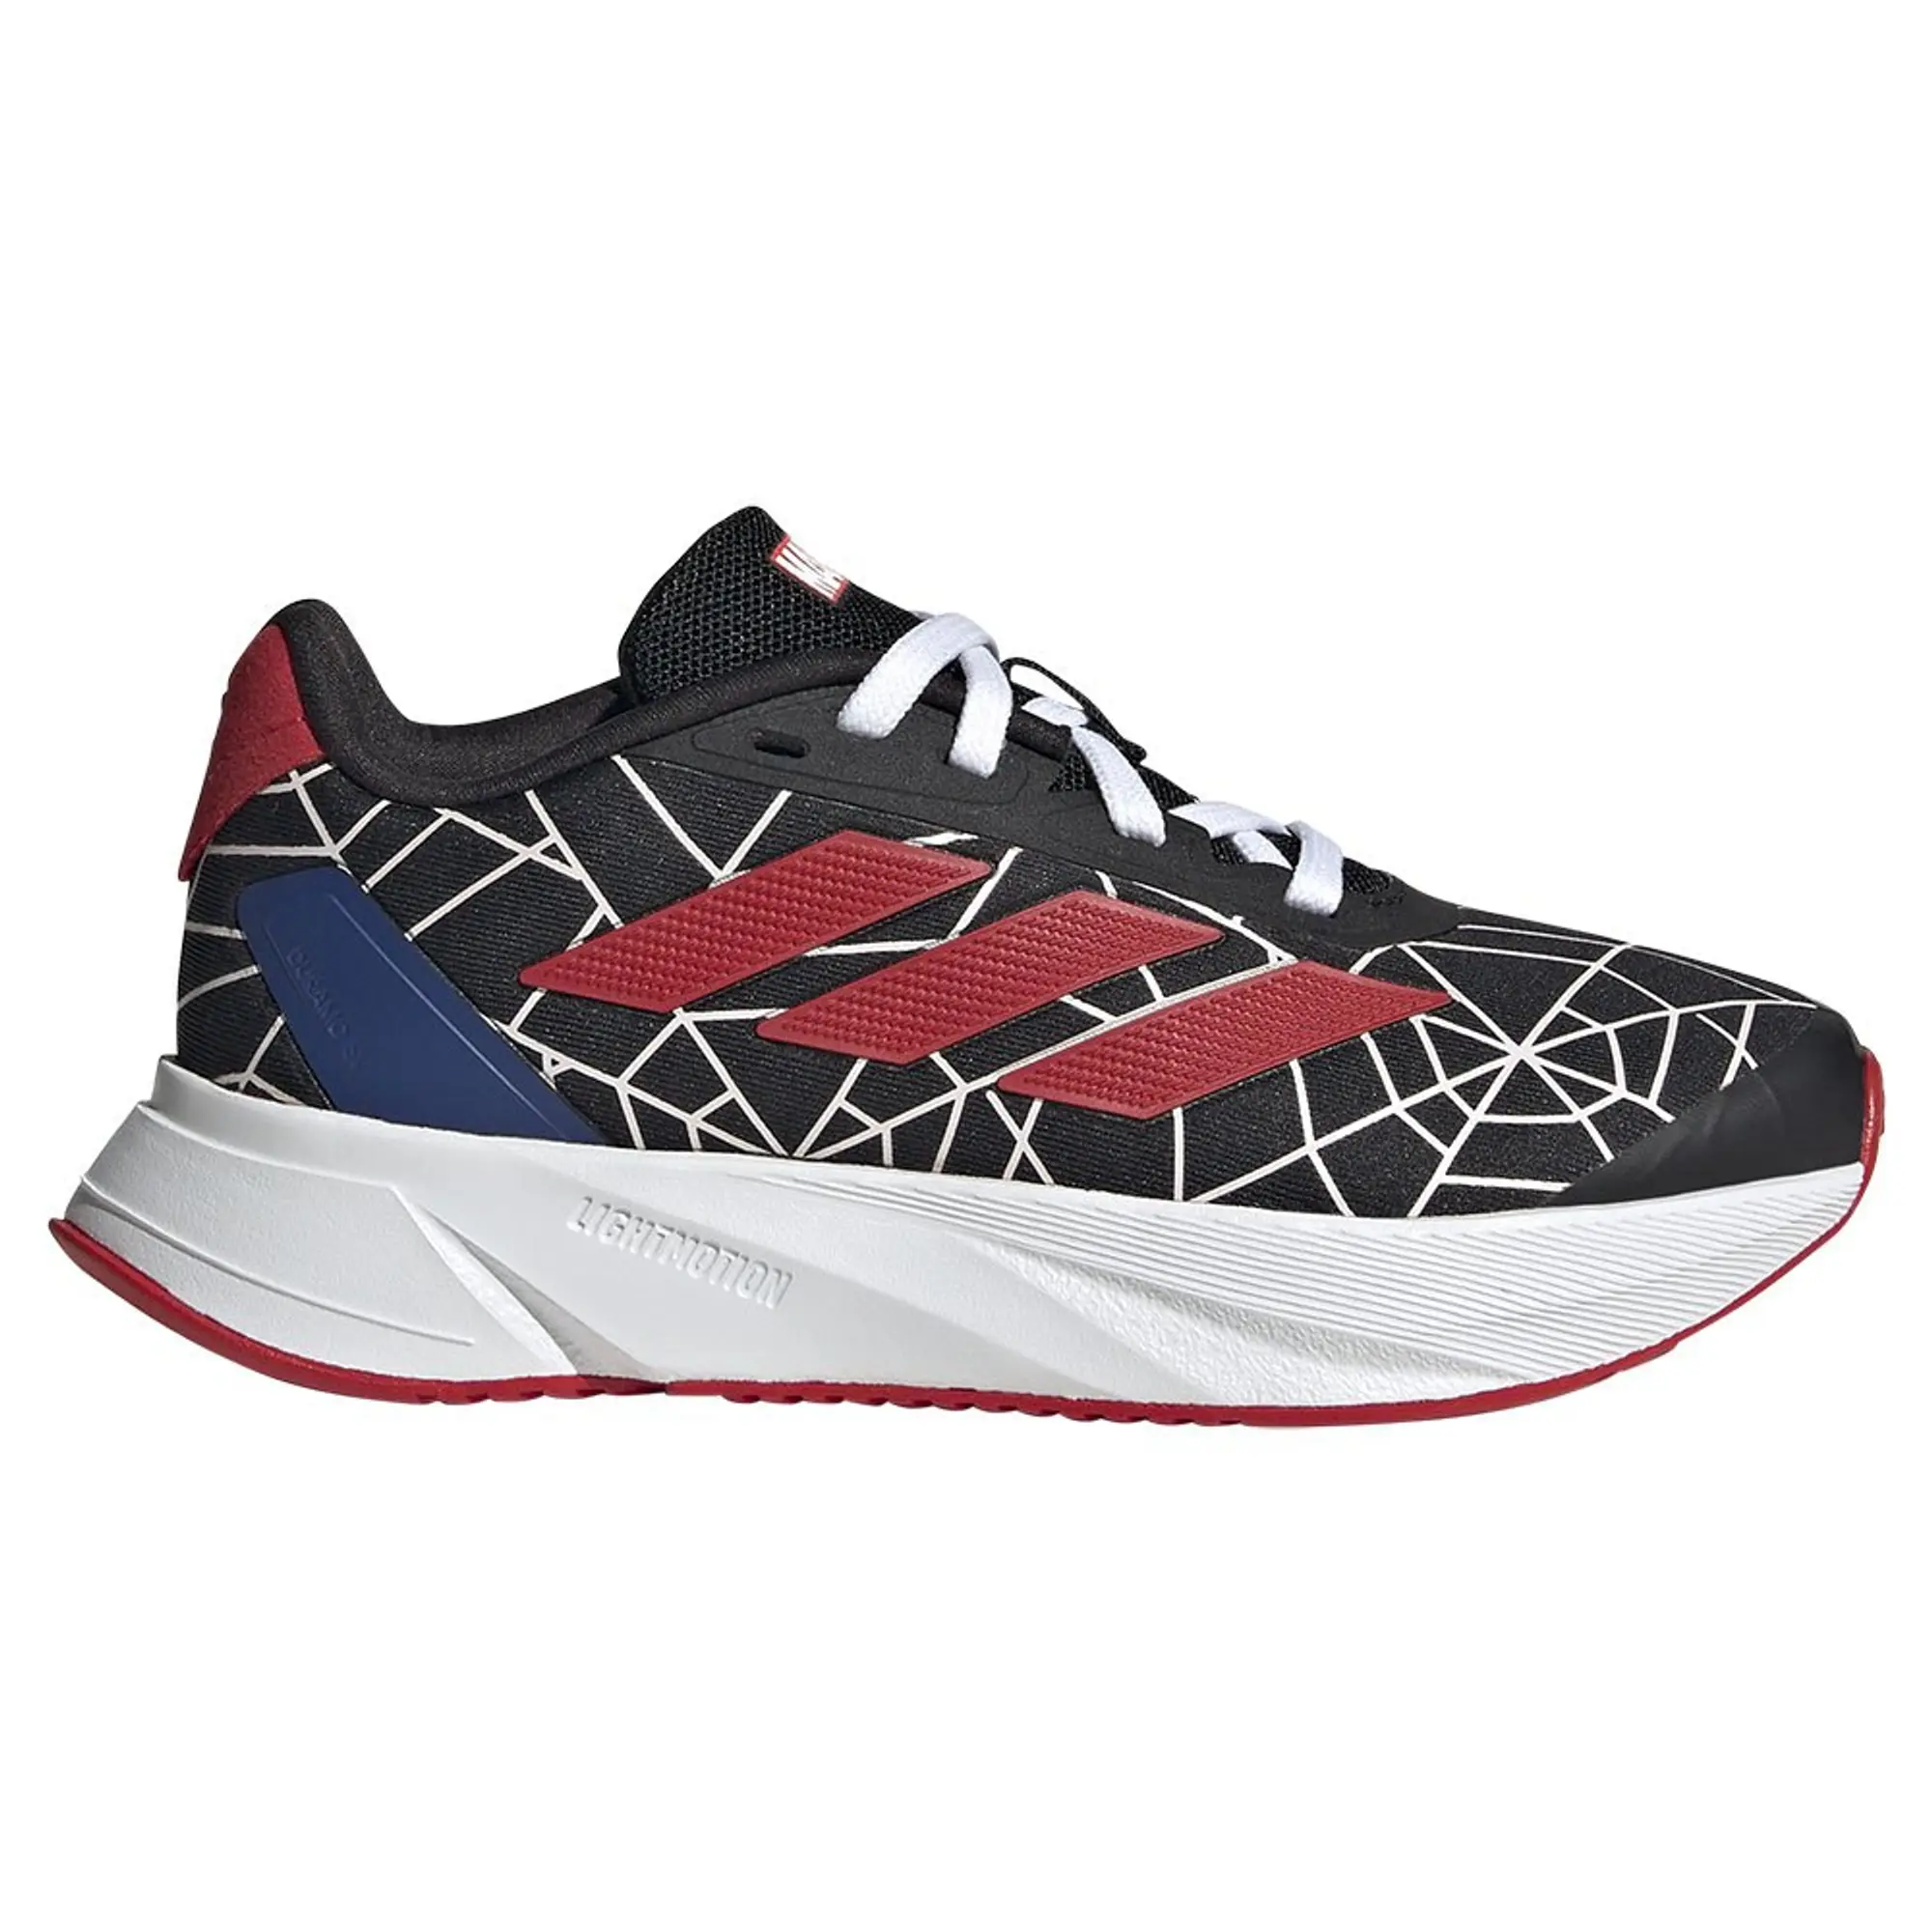 Adidas Duramo Spider-man Running Shoes  - Multicolor